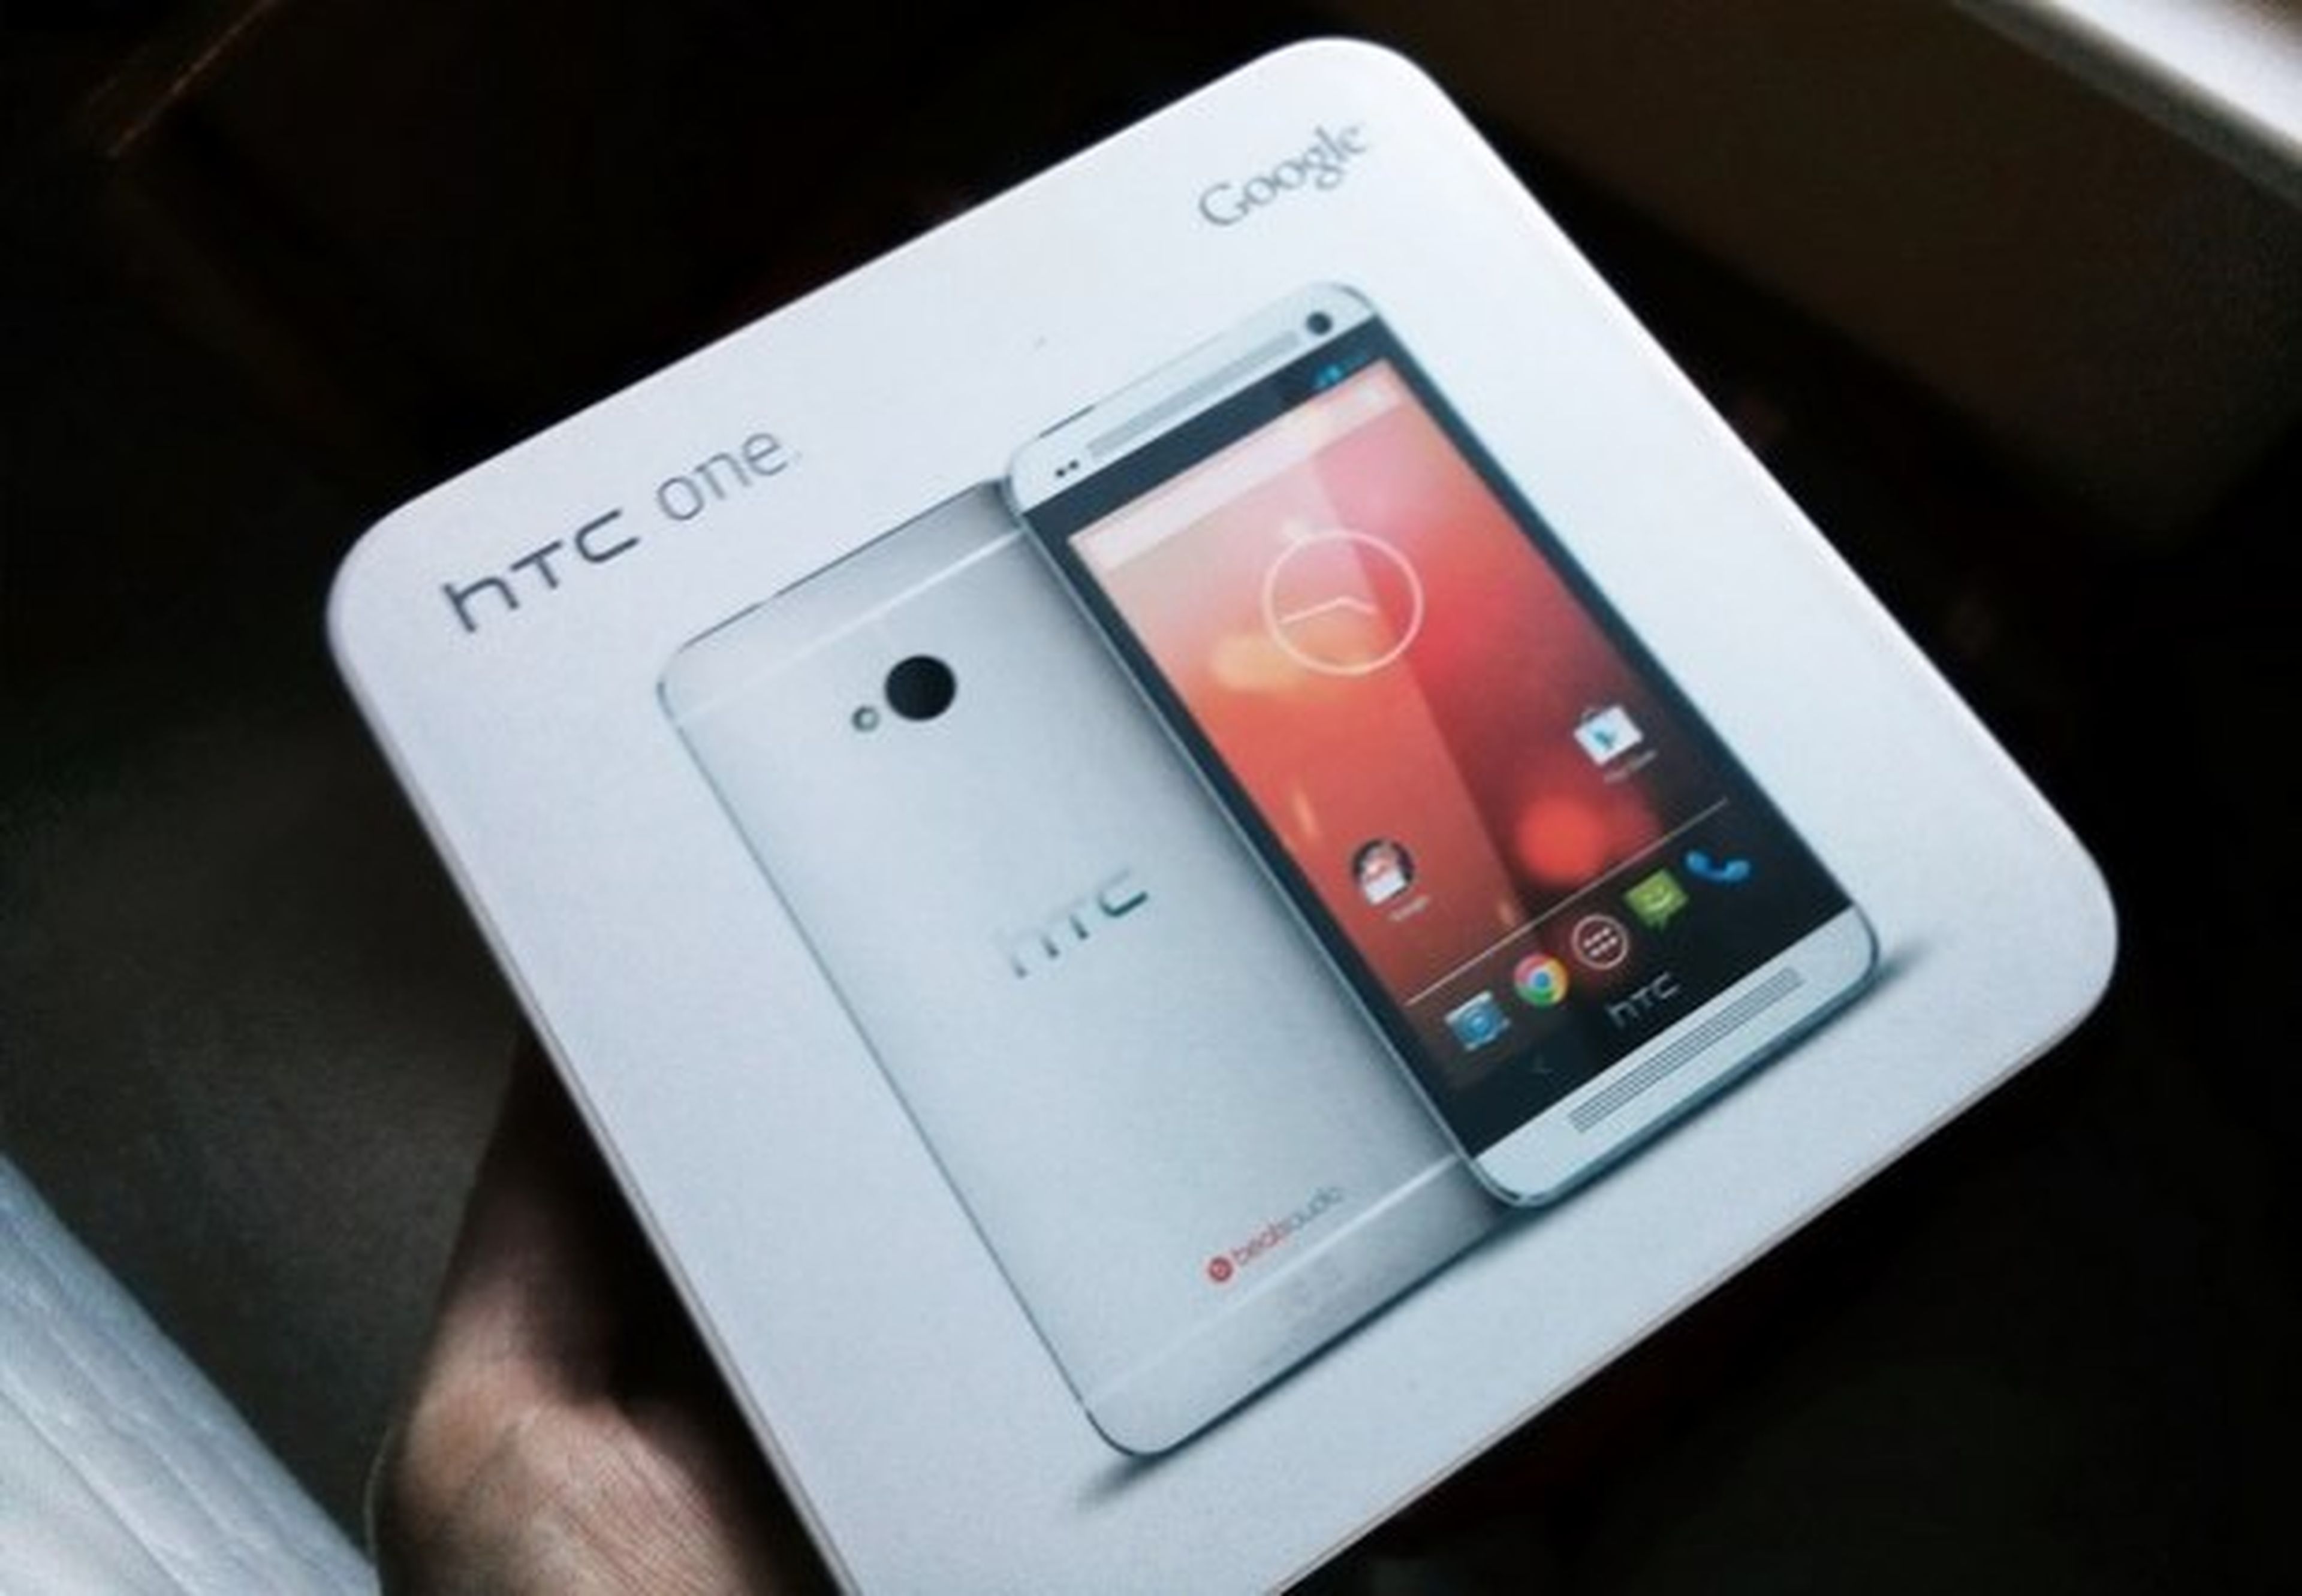 HTC One GE